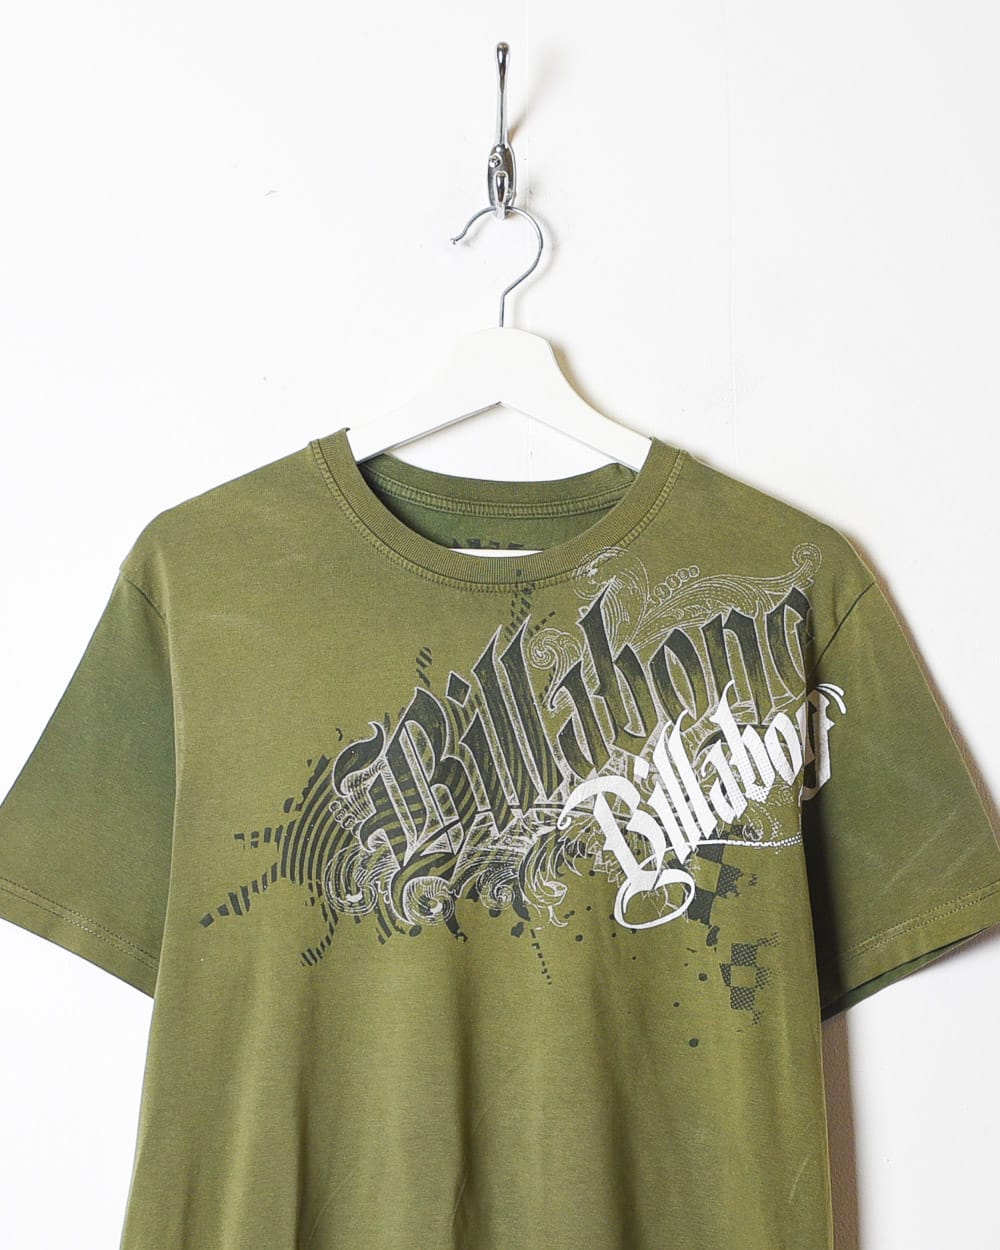 Khaki Billabong T-Shirt - Small